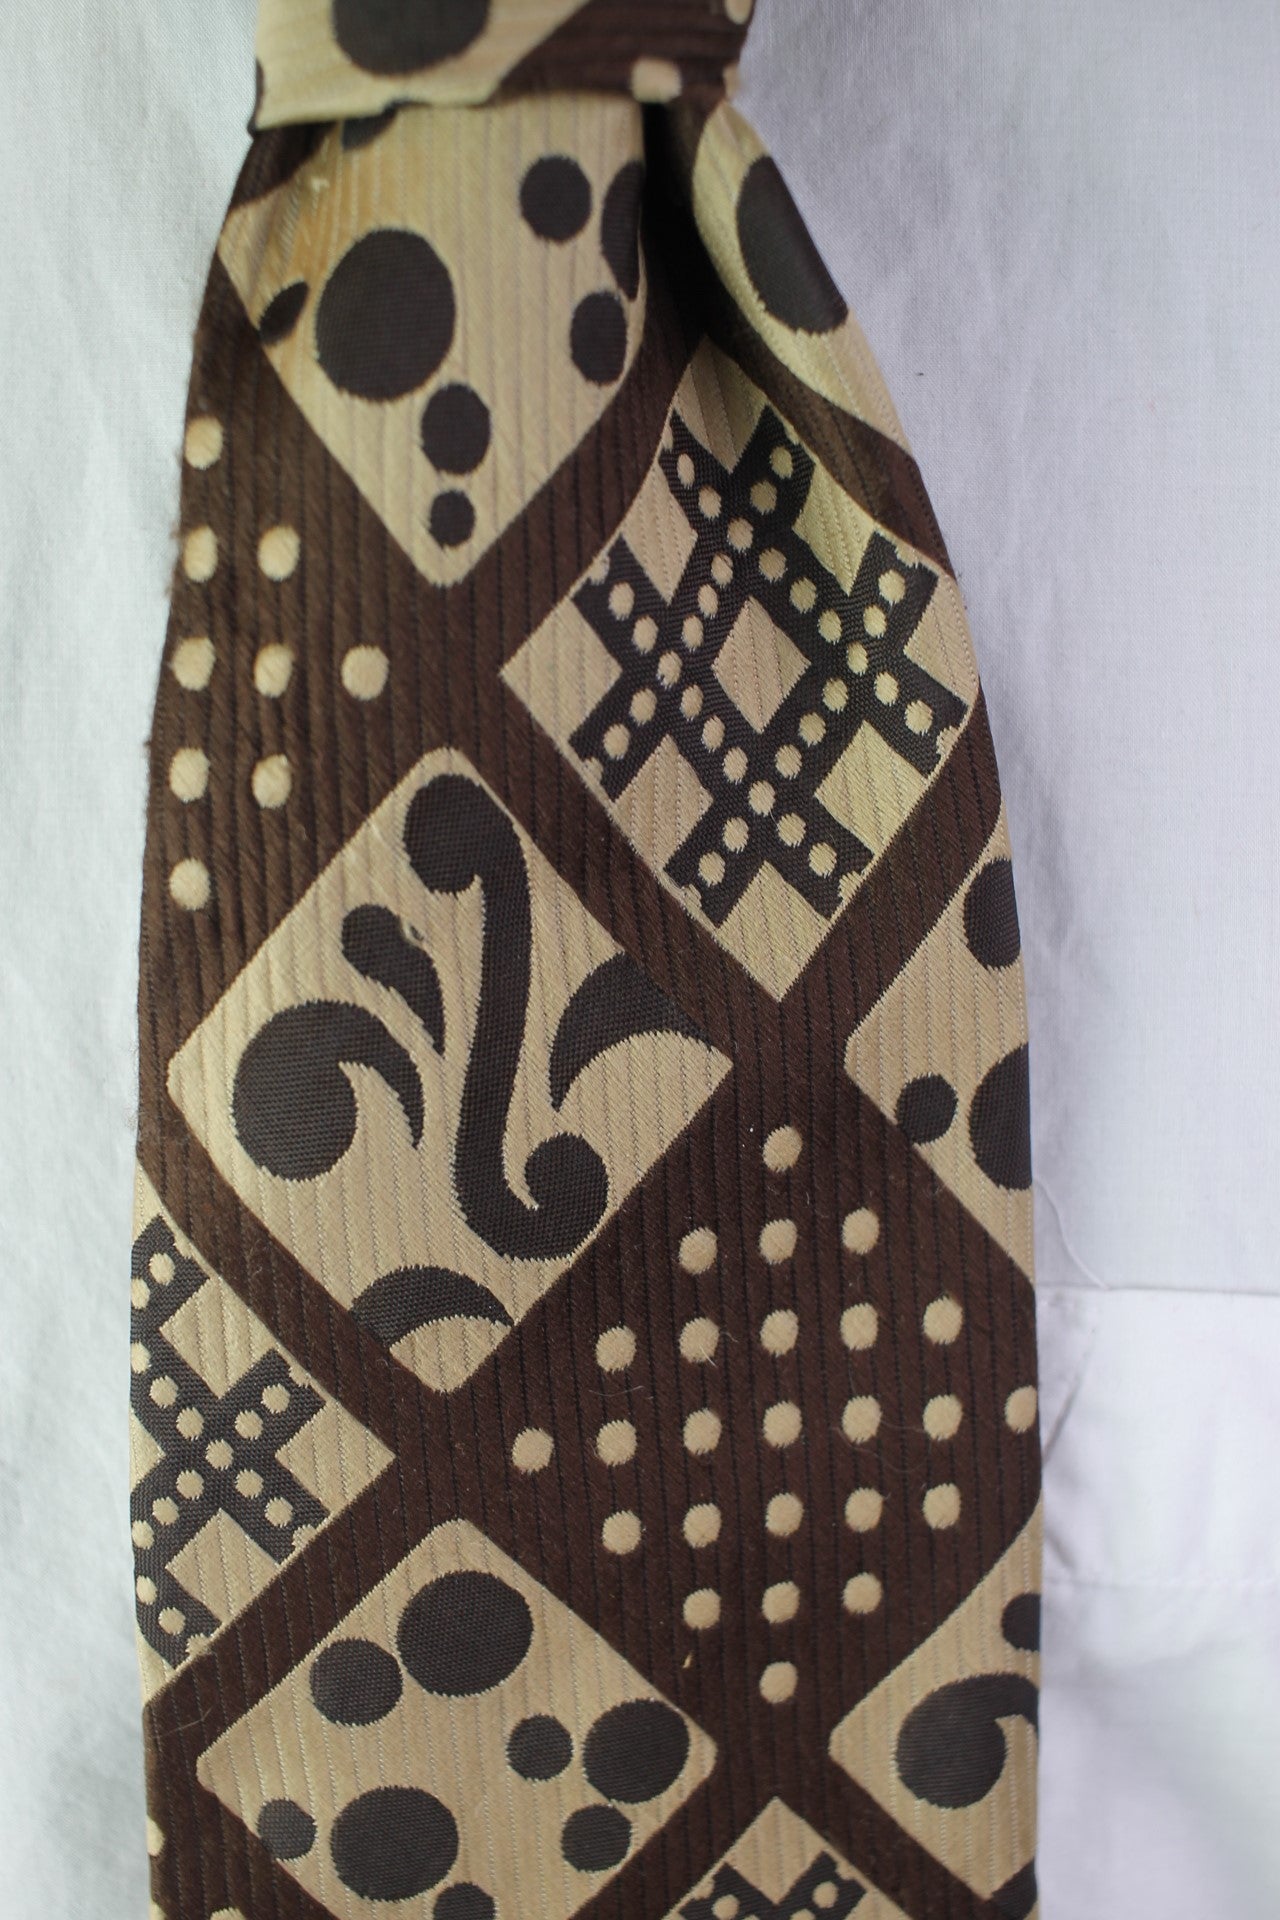 Vintage 1950s/1960s brown gold squares pattern tie